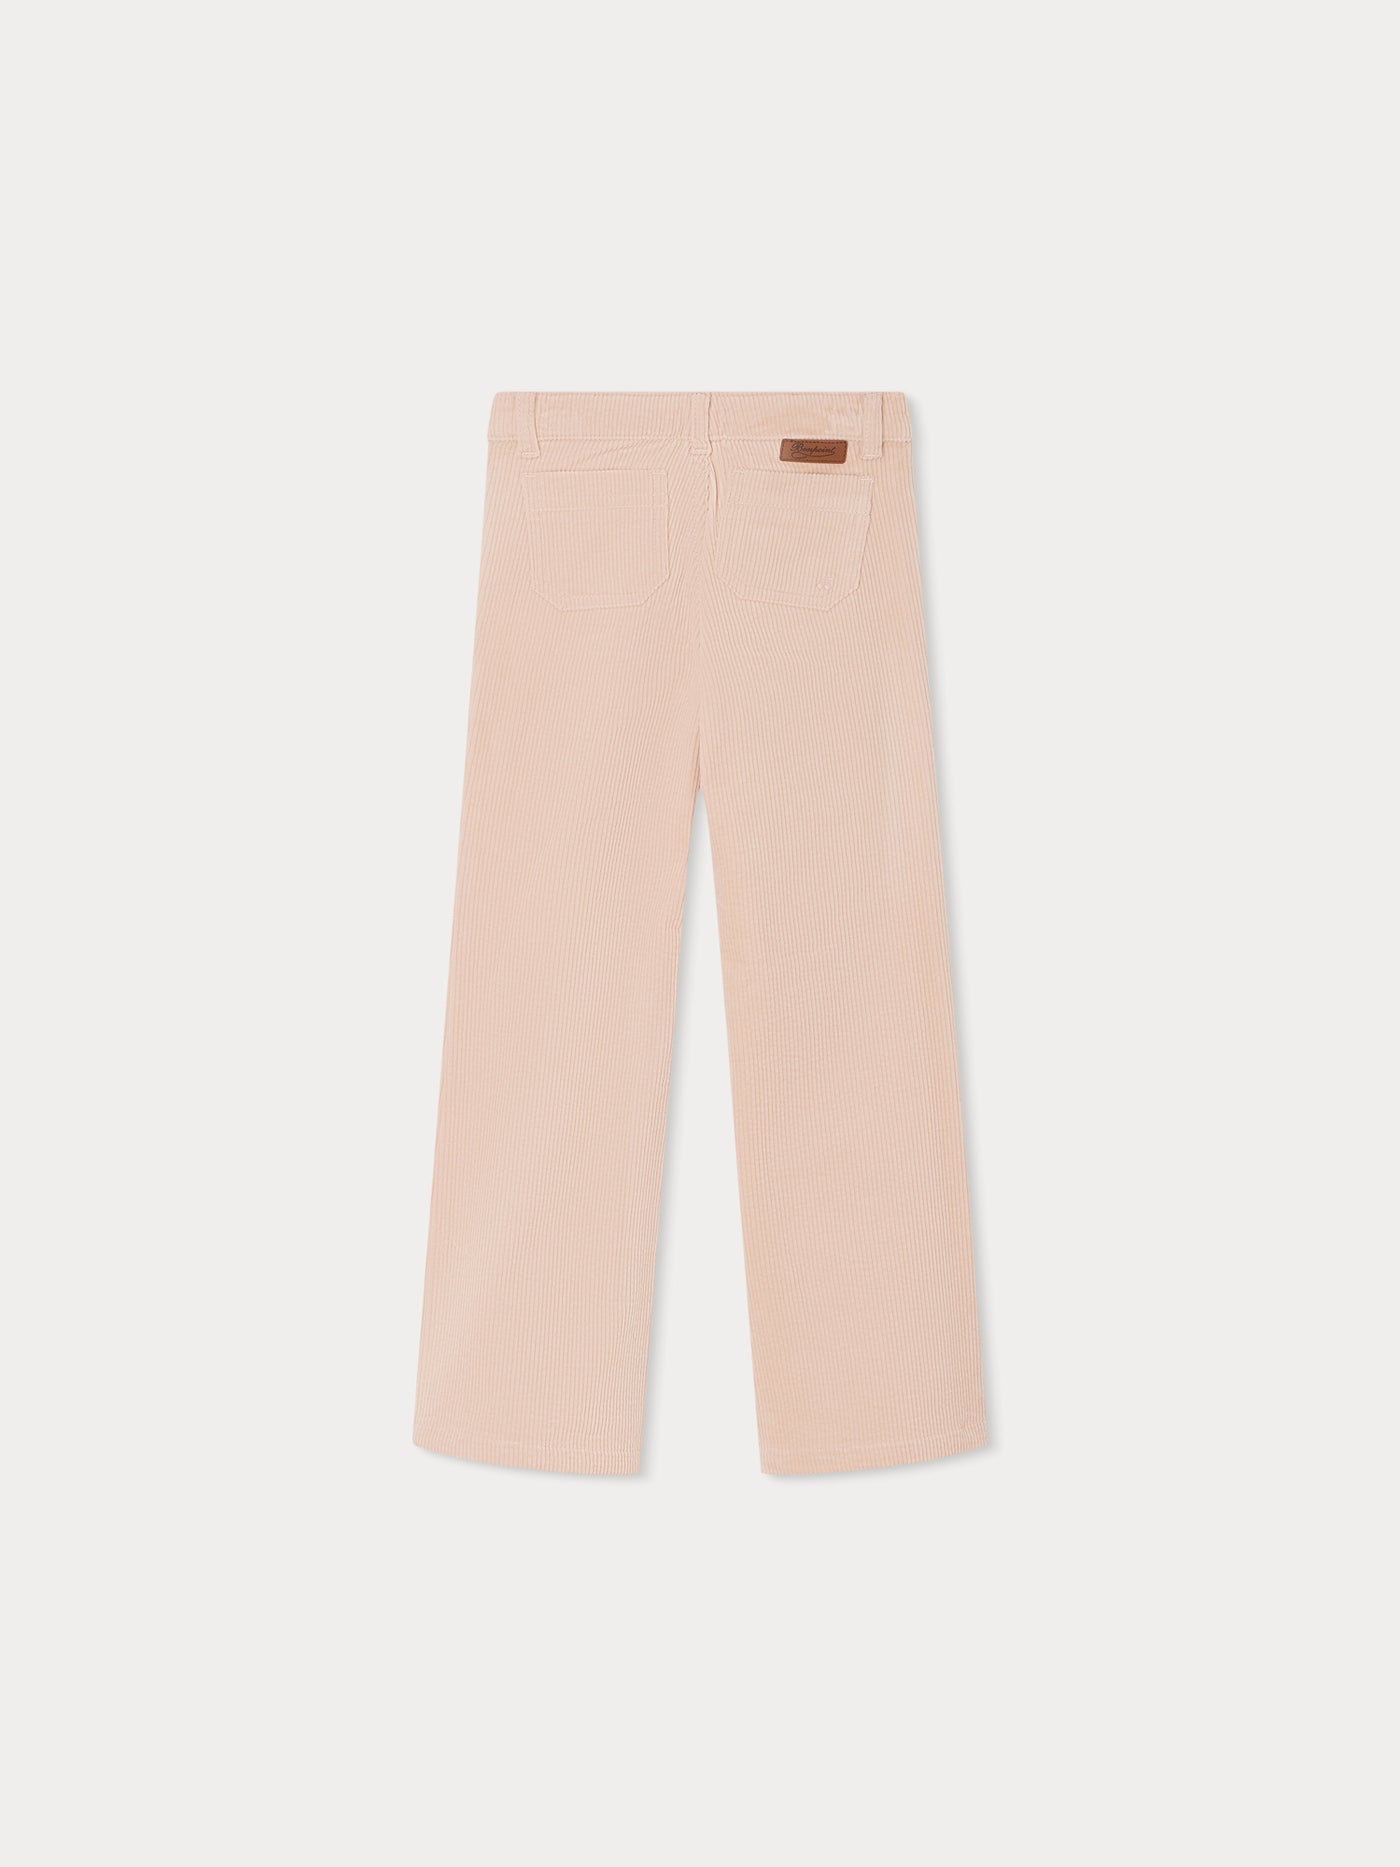 Junon Pants pink blush